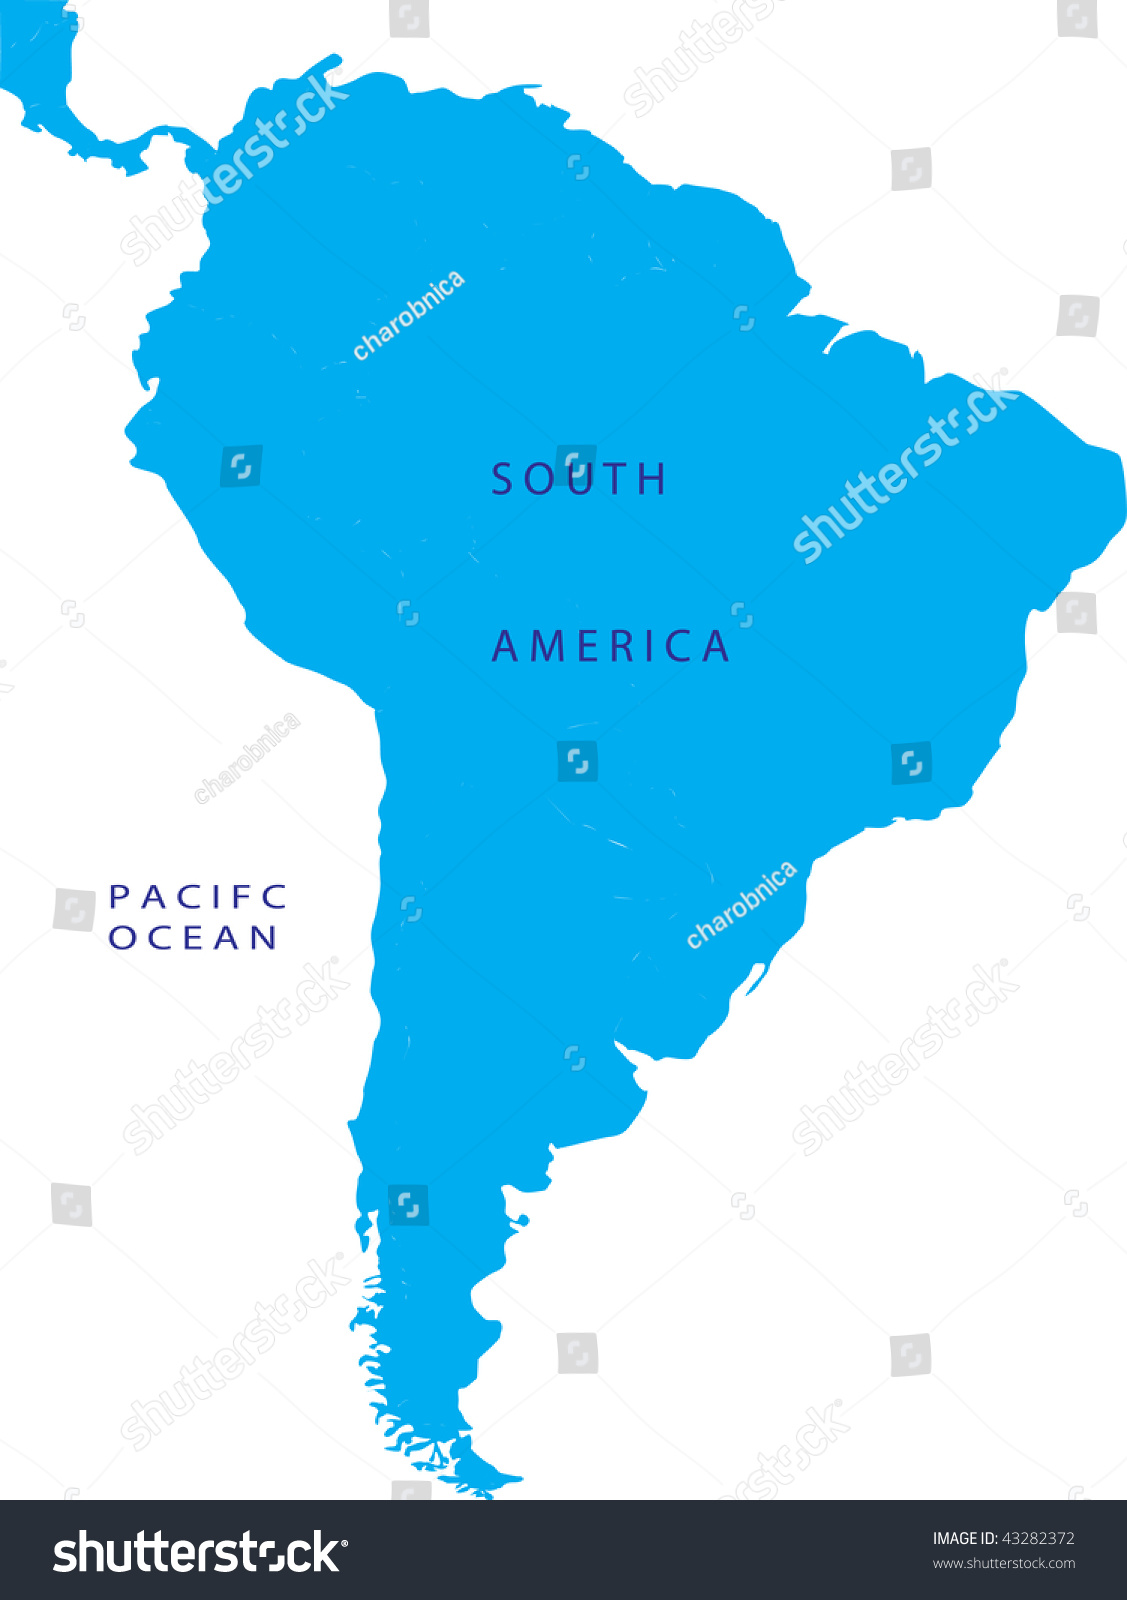 Vektor Stok Political Map South America Tanpa Royalti 43282372 Shutterstock 3004